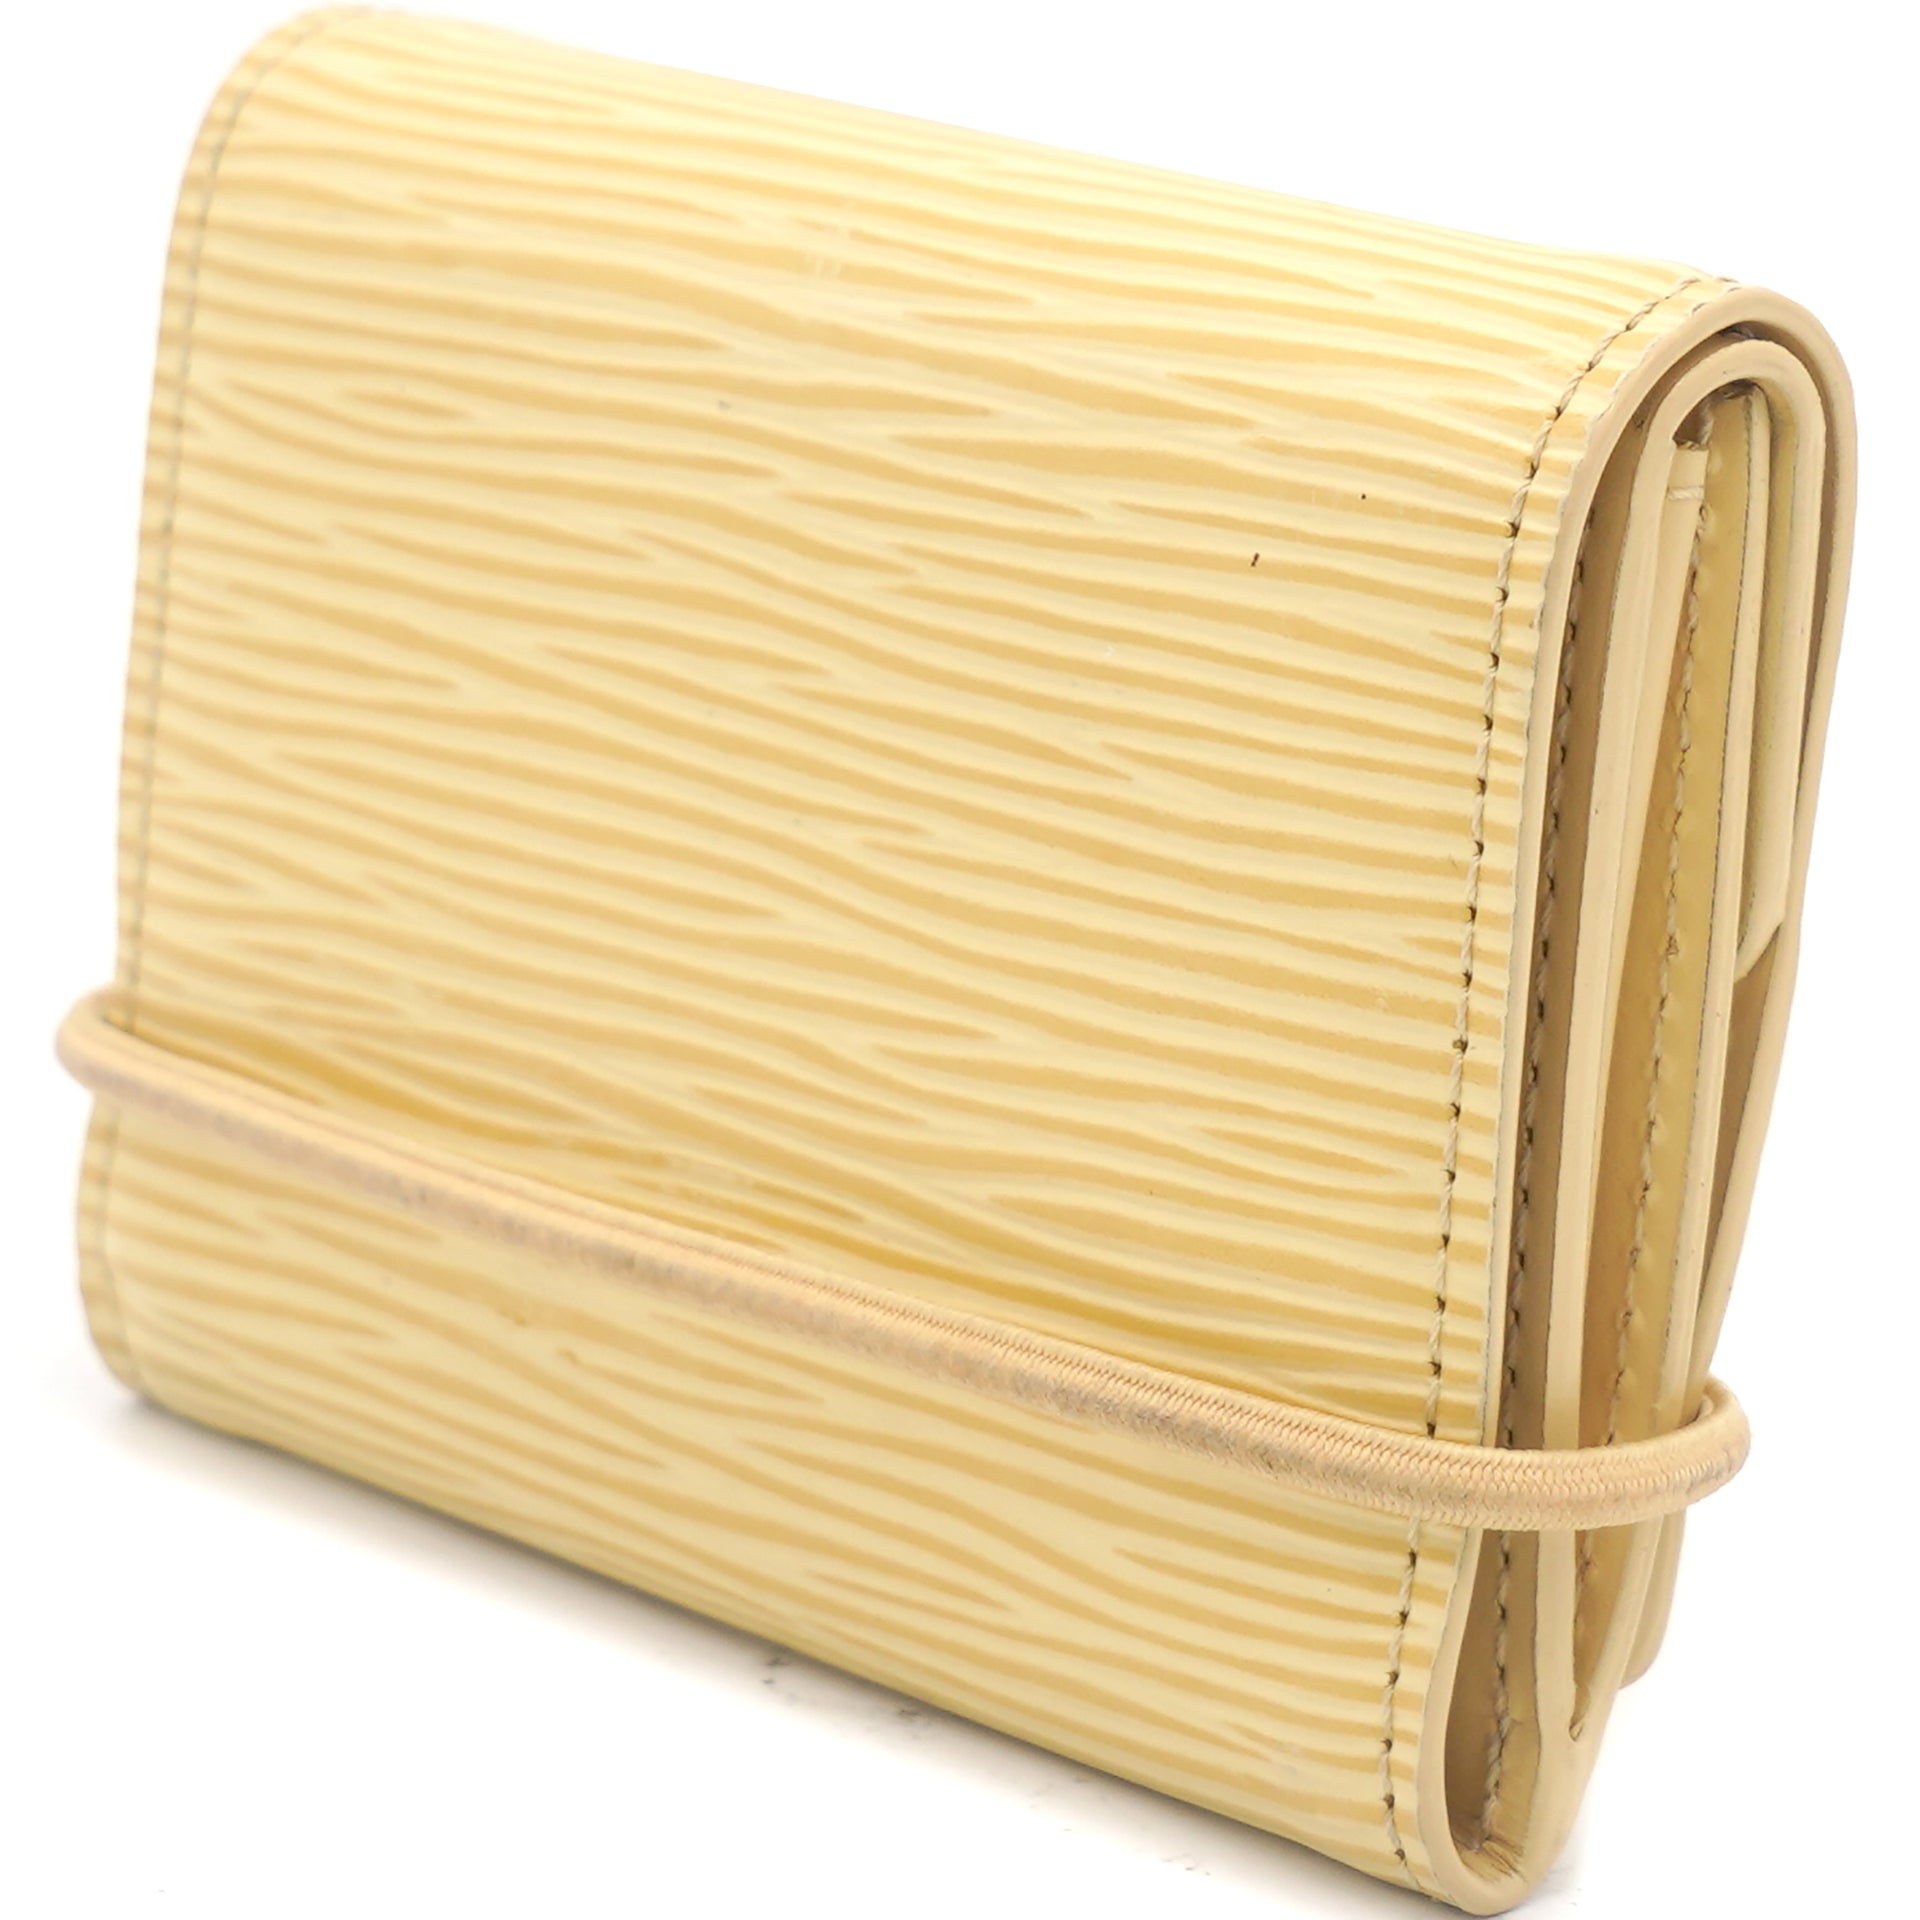 Louis Vuitton Epi Leather Bifold Wallet - Yellow Wallets